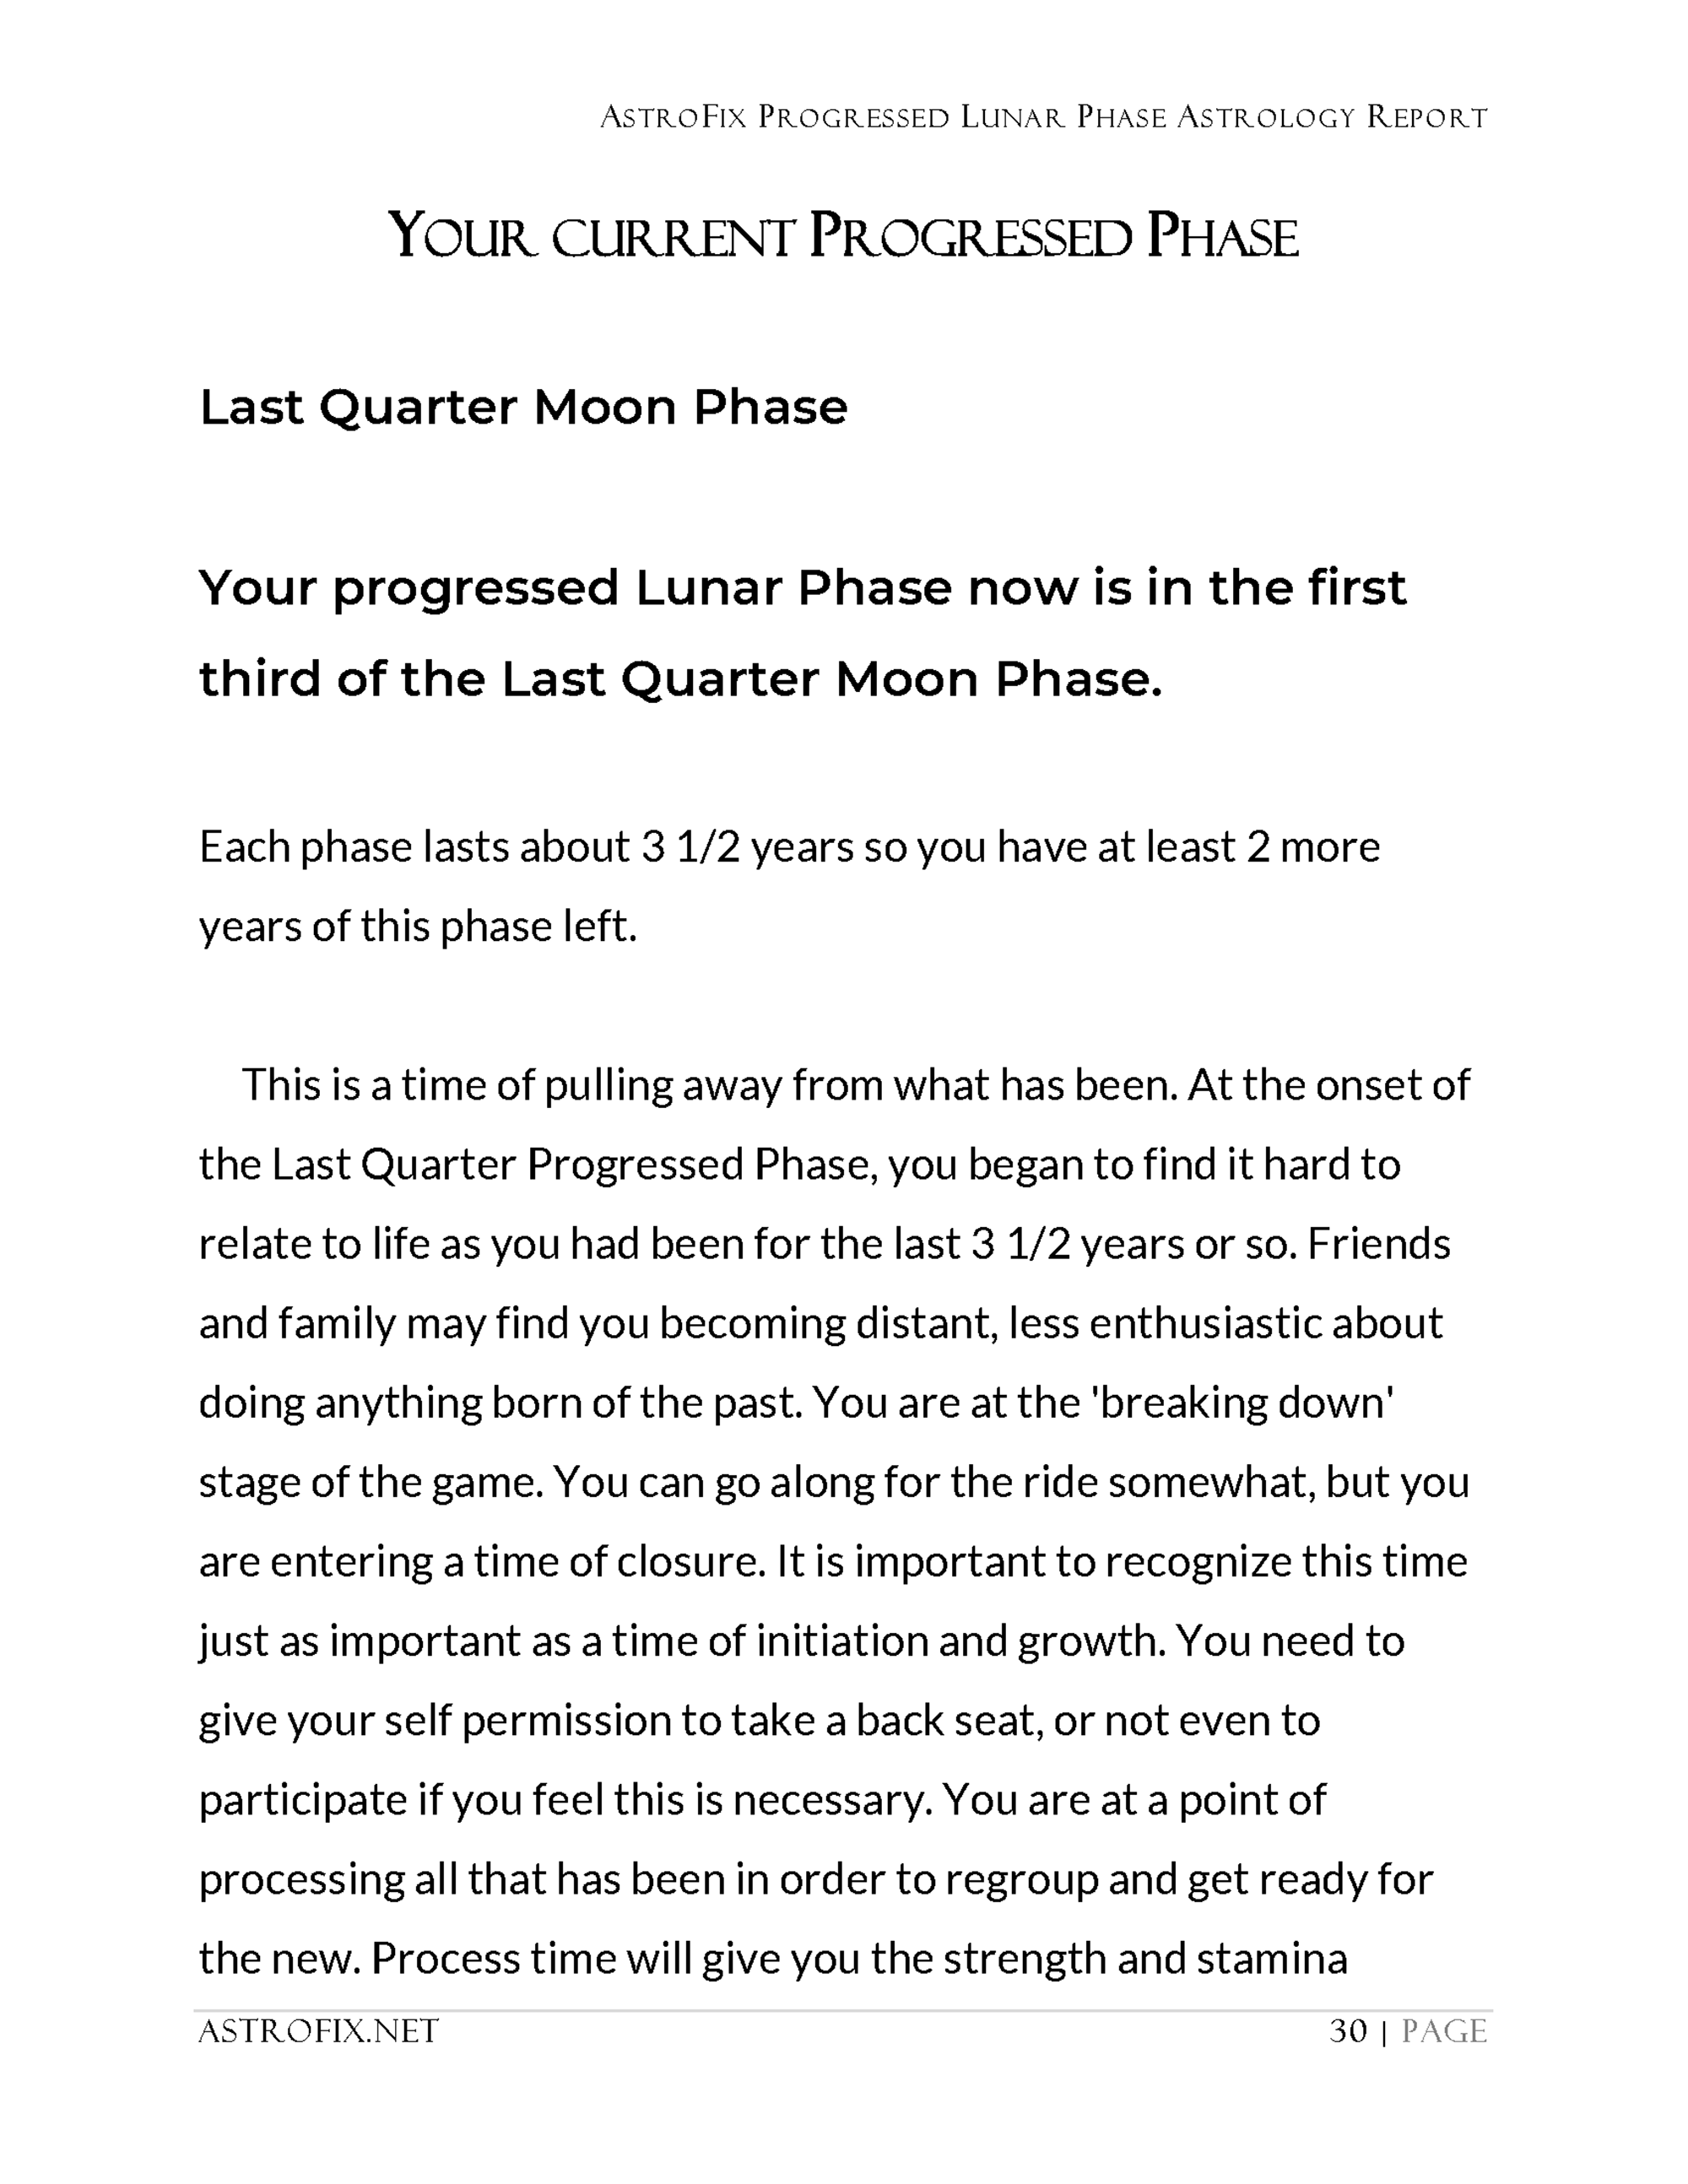 Progressed Lunar Phase Astrology Report